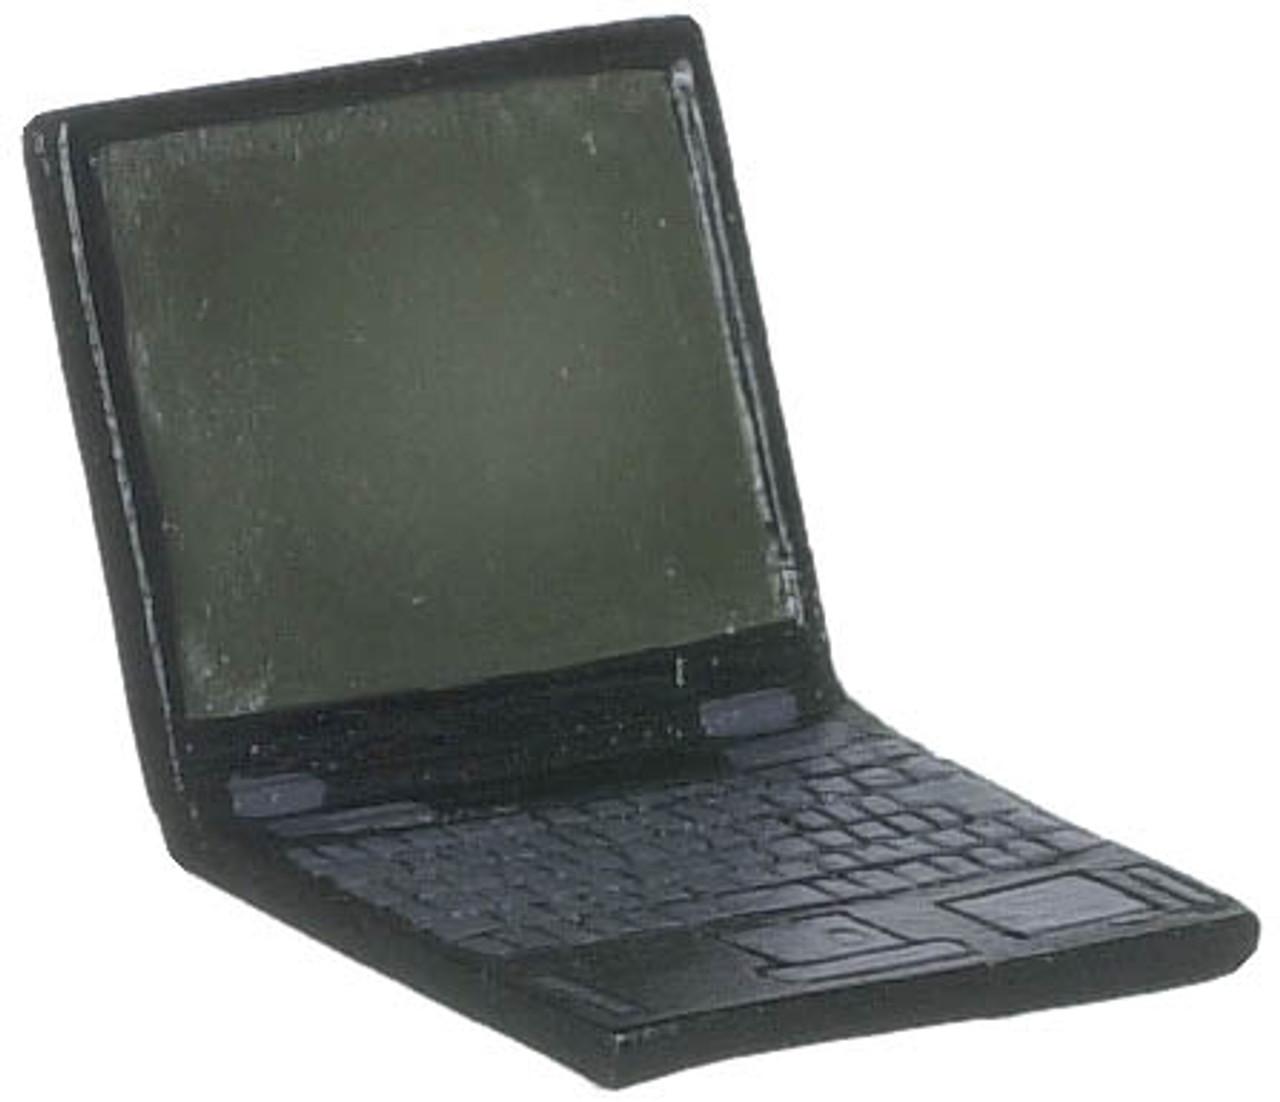 Laptop Computer - Black